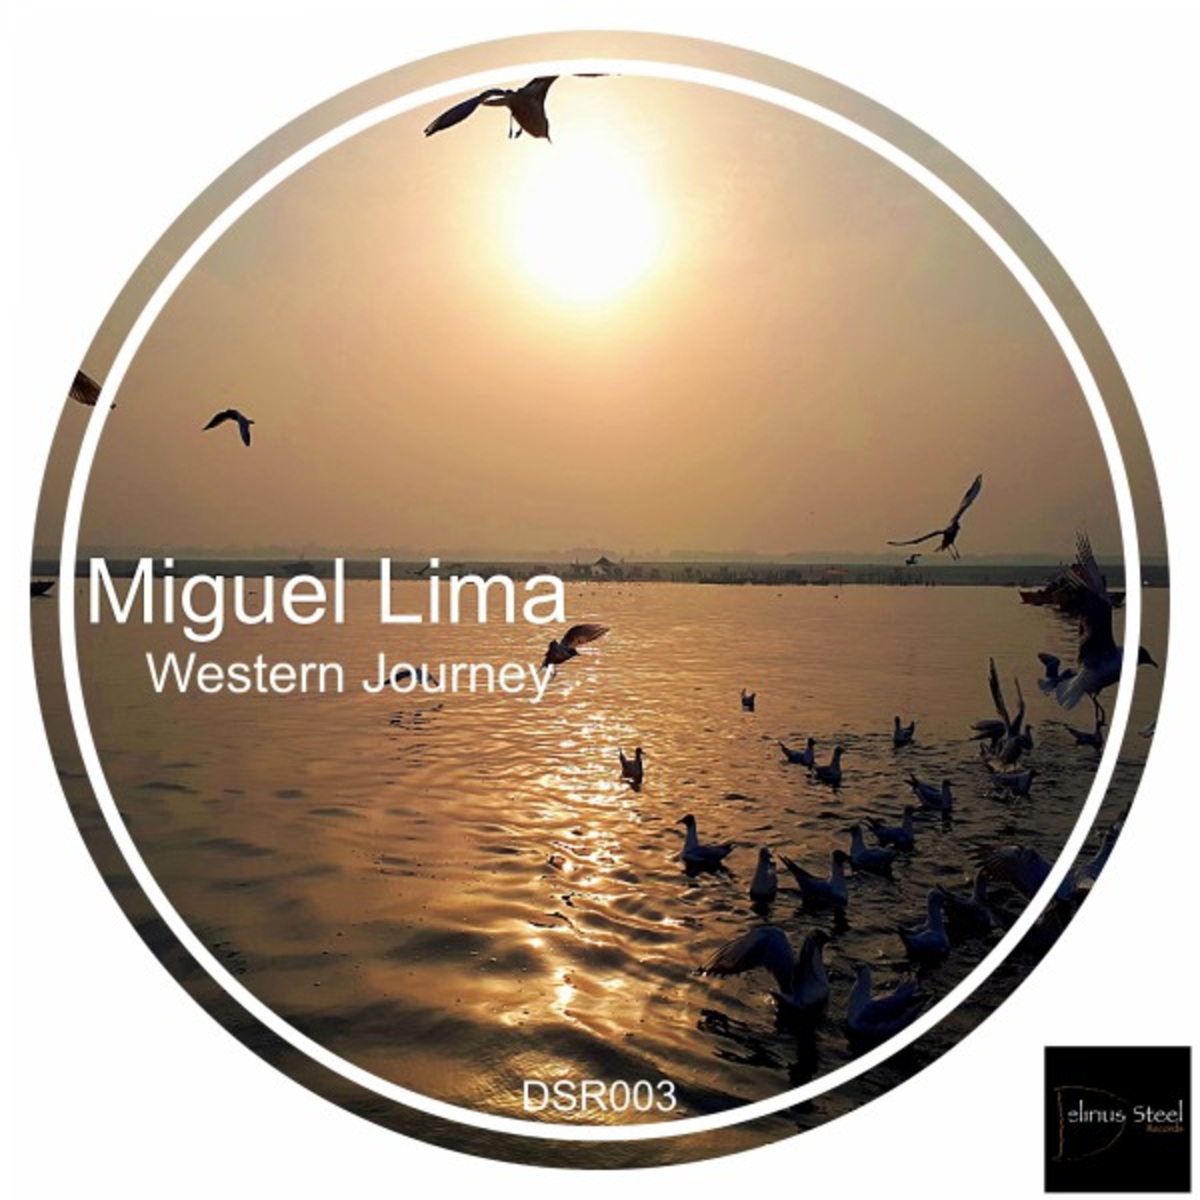 Miguel Lima - Western Journey / Delirius Steel Records